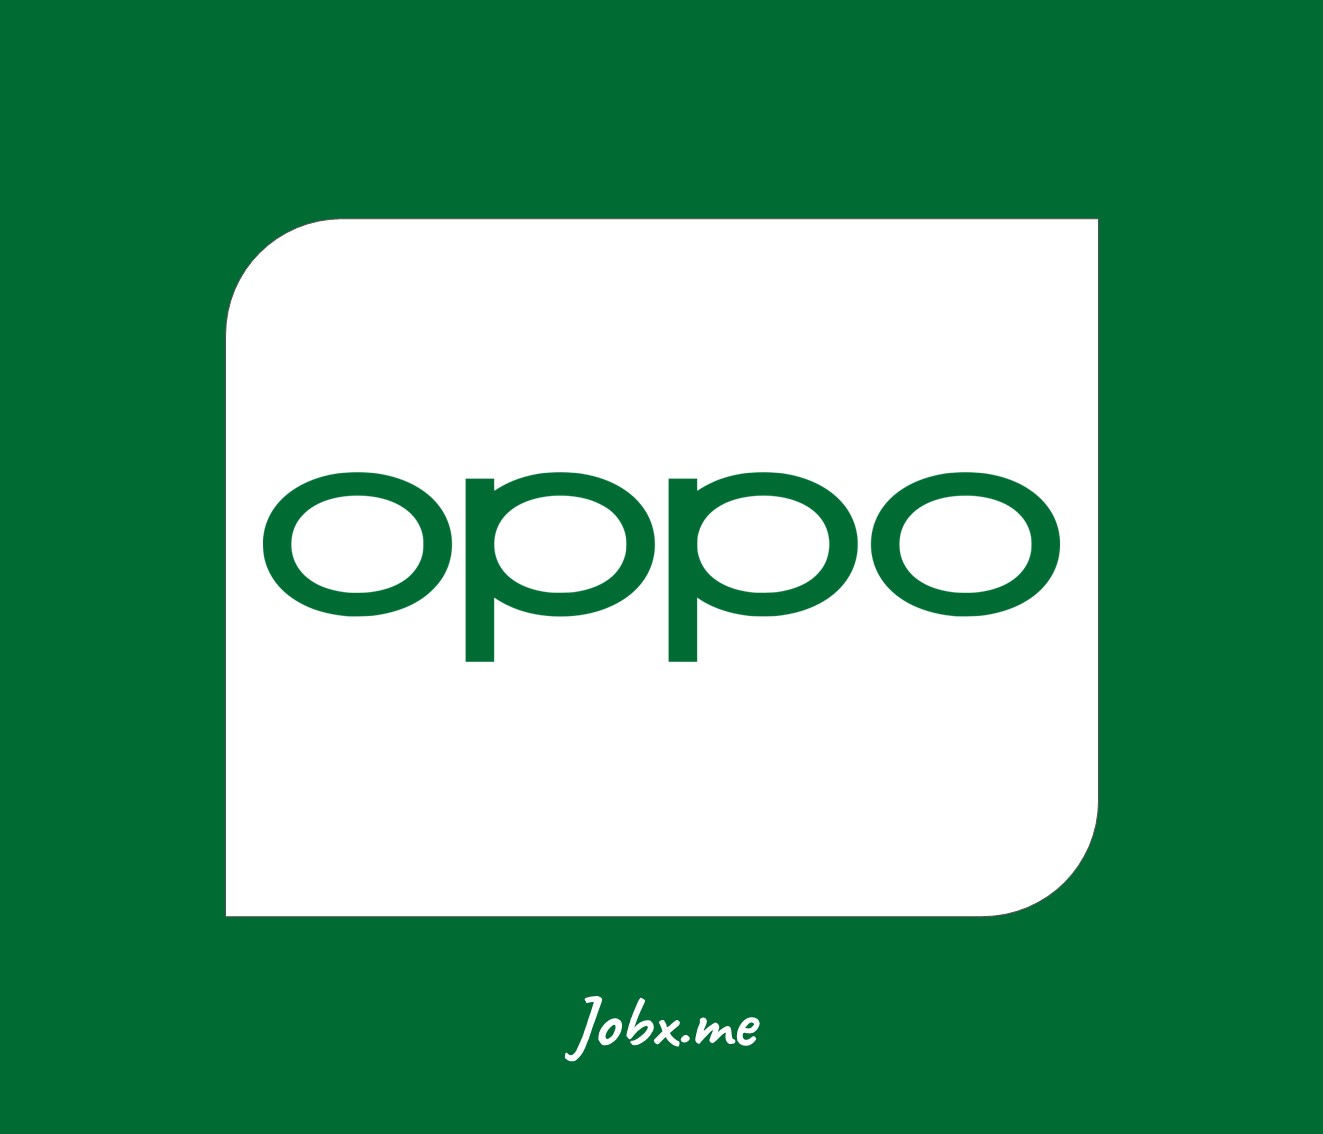 OPPO Jobs